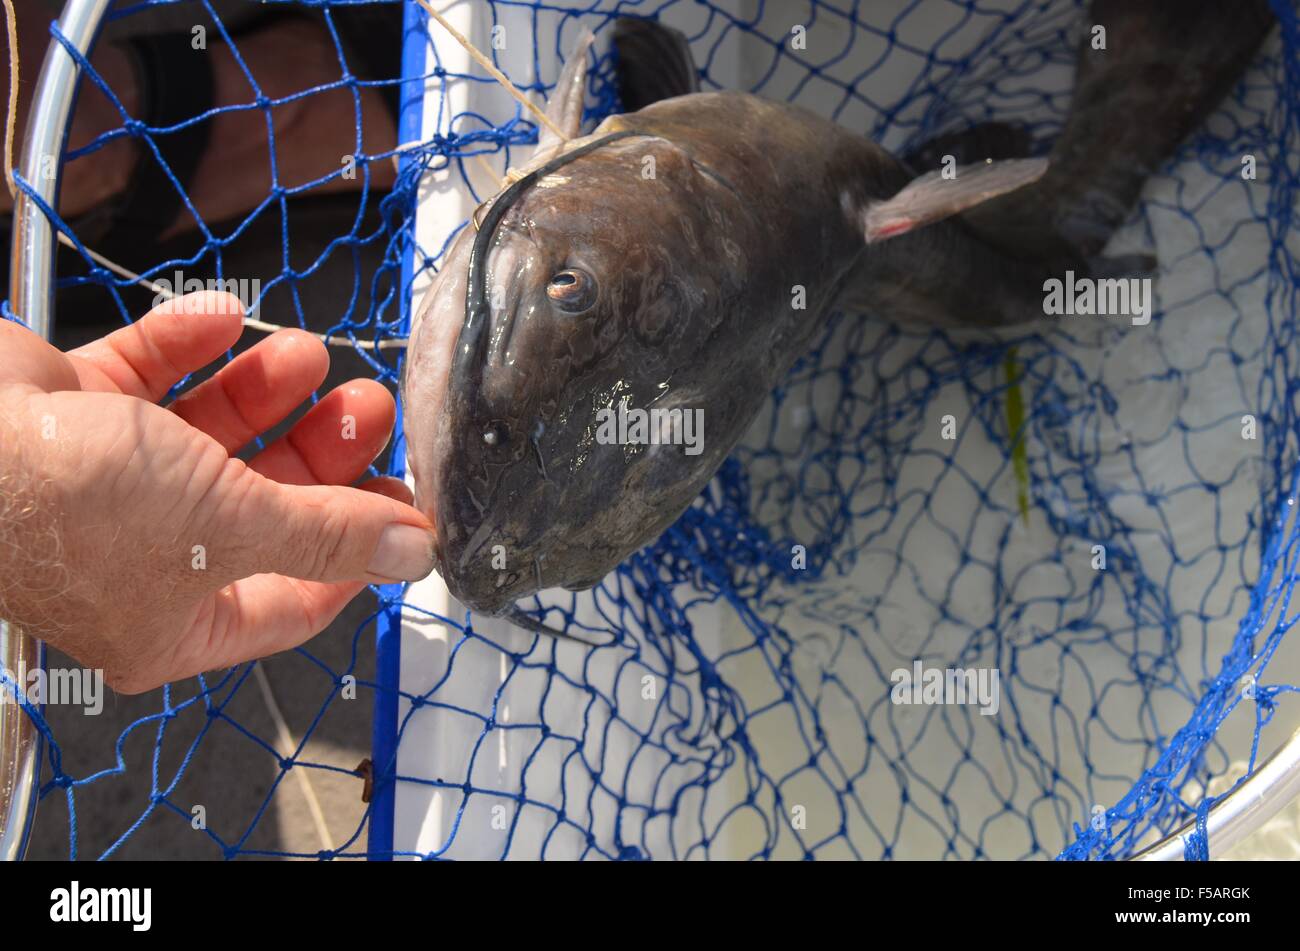 Catfish caught in net by fisherman Stock Photo